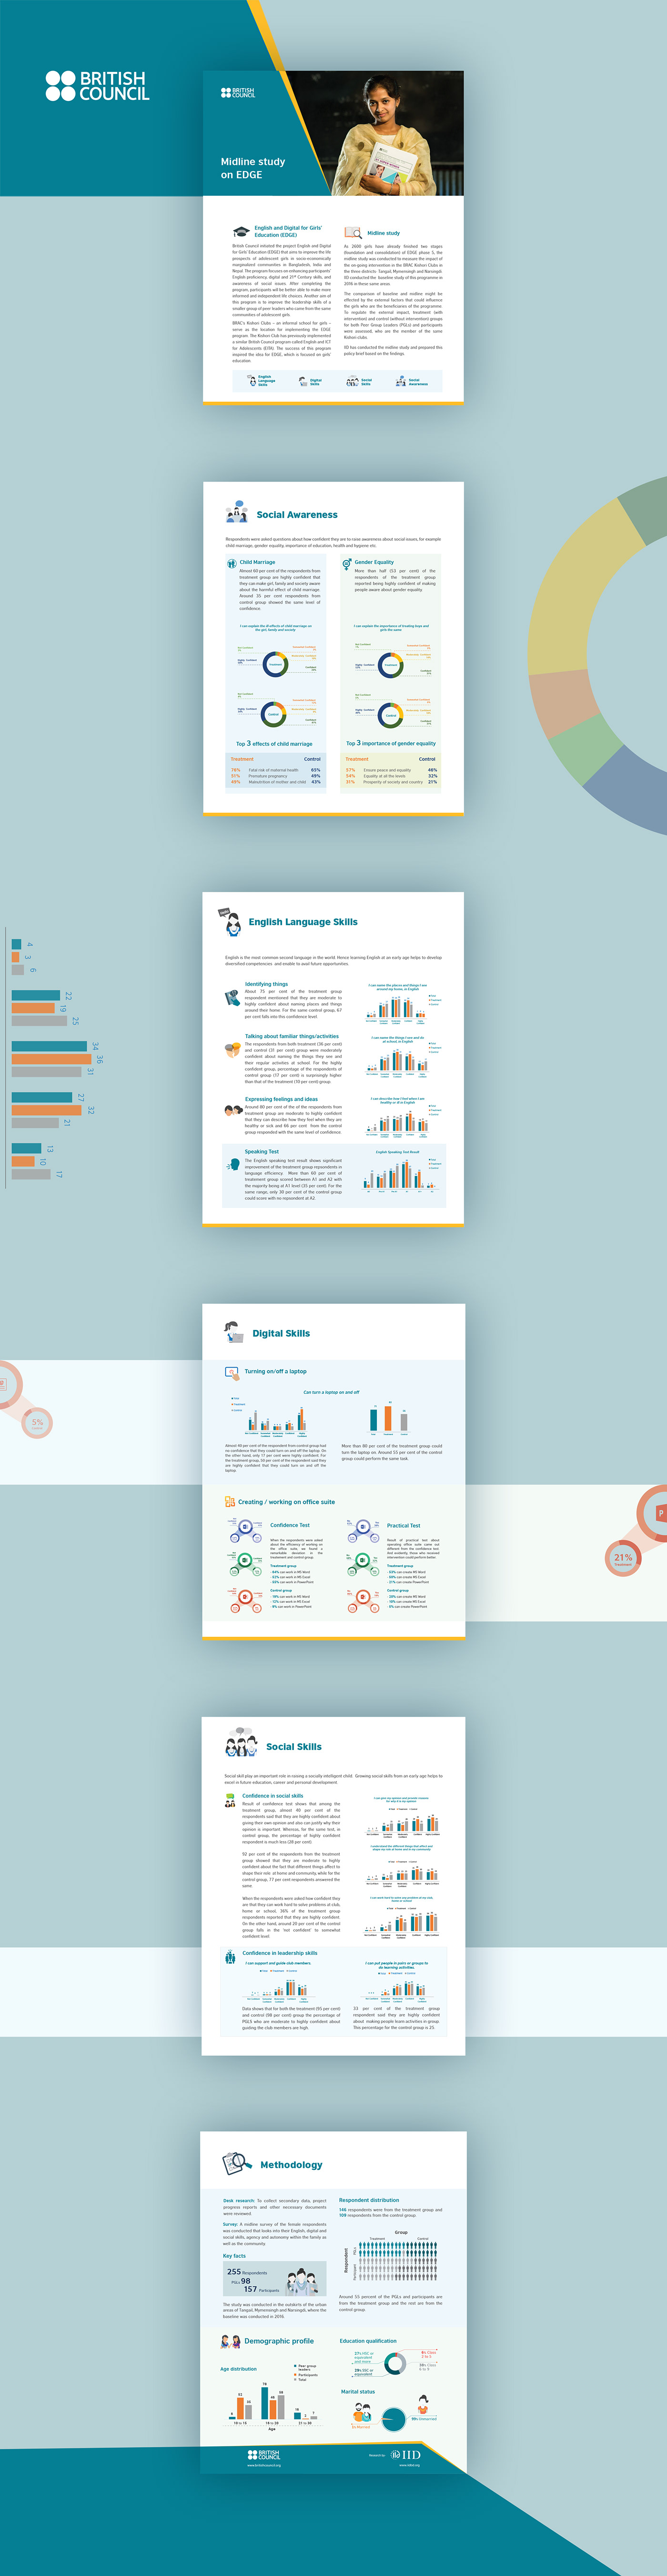 report design cover design publication design British Council infographic design ILLUSTRATION 